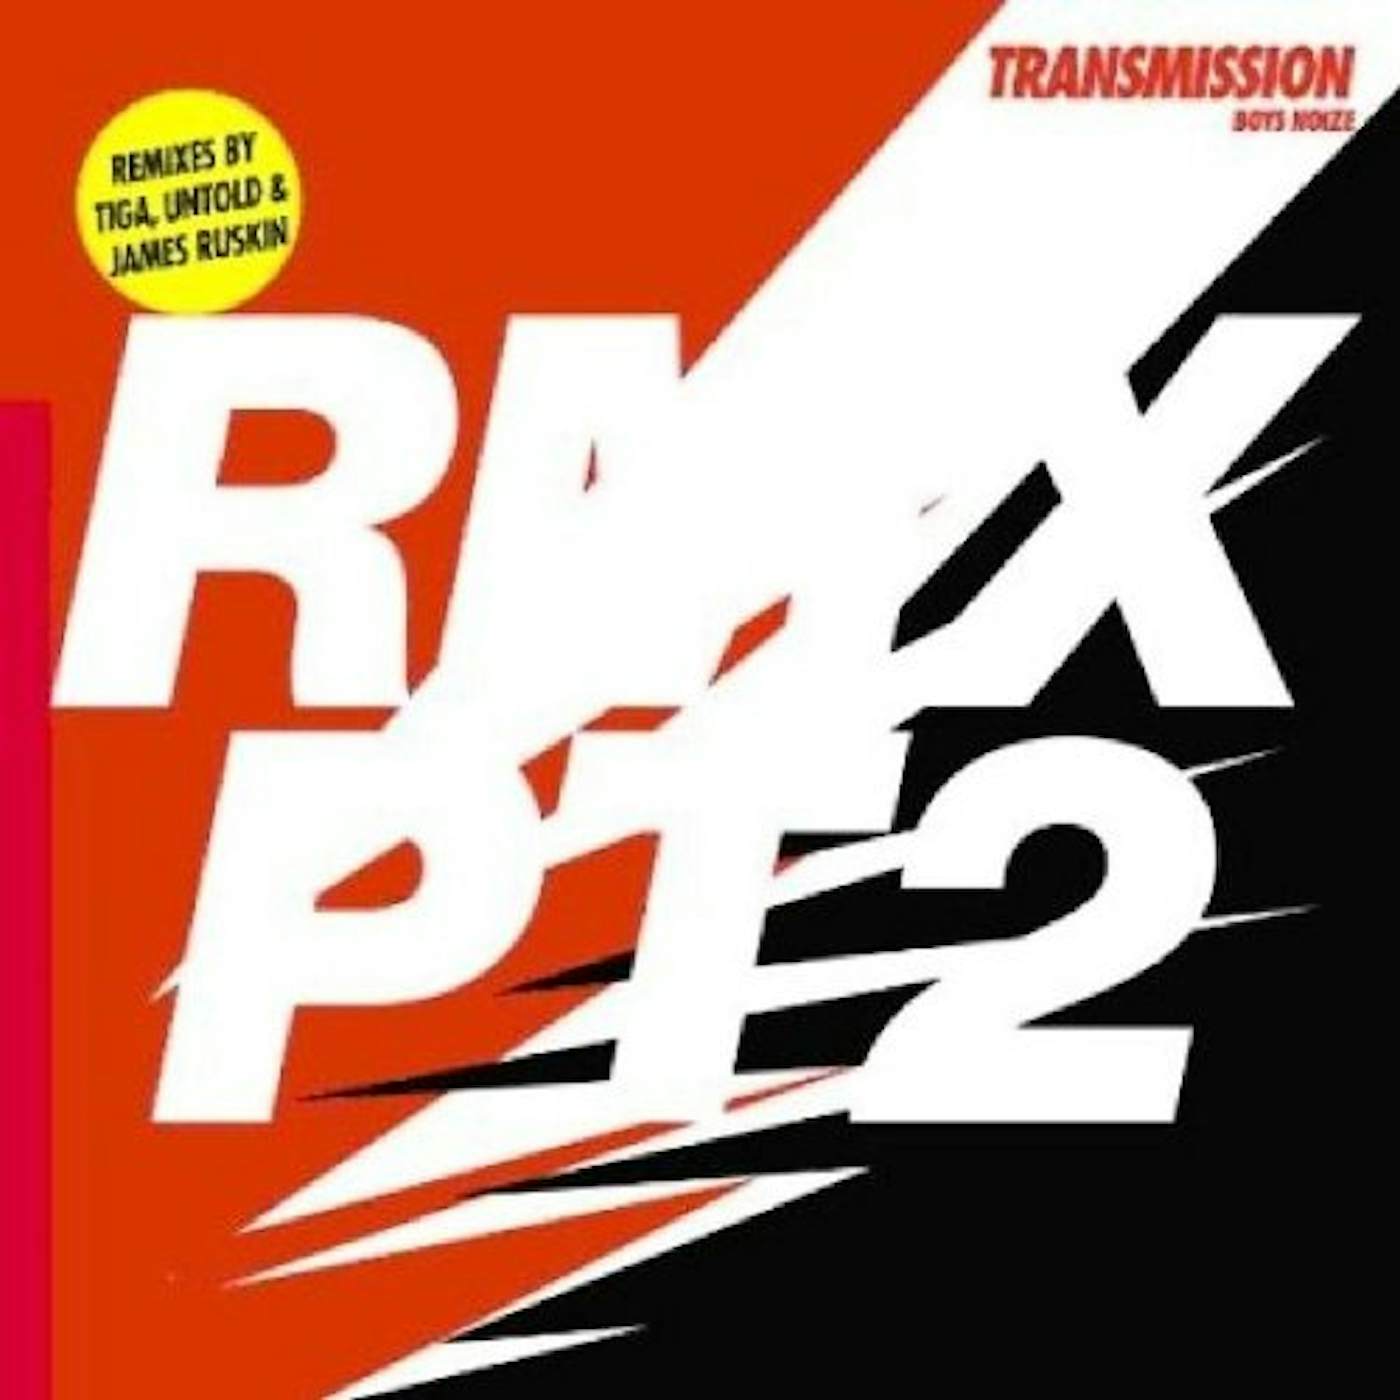 Boys Noize TRANSMISSION RMX 2 Vinyl Record